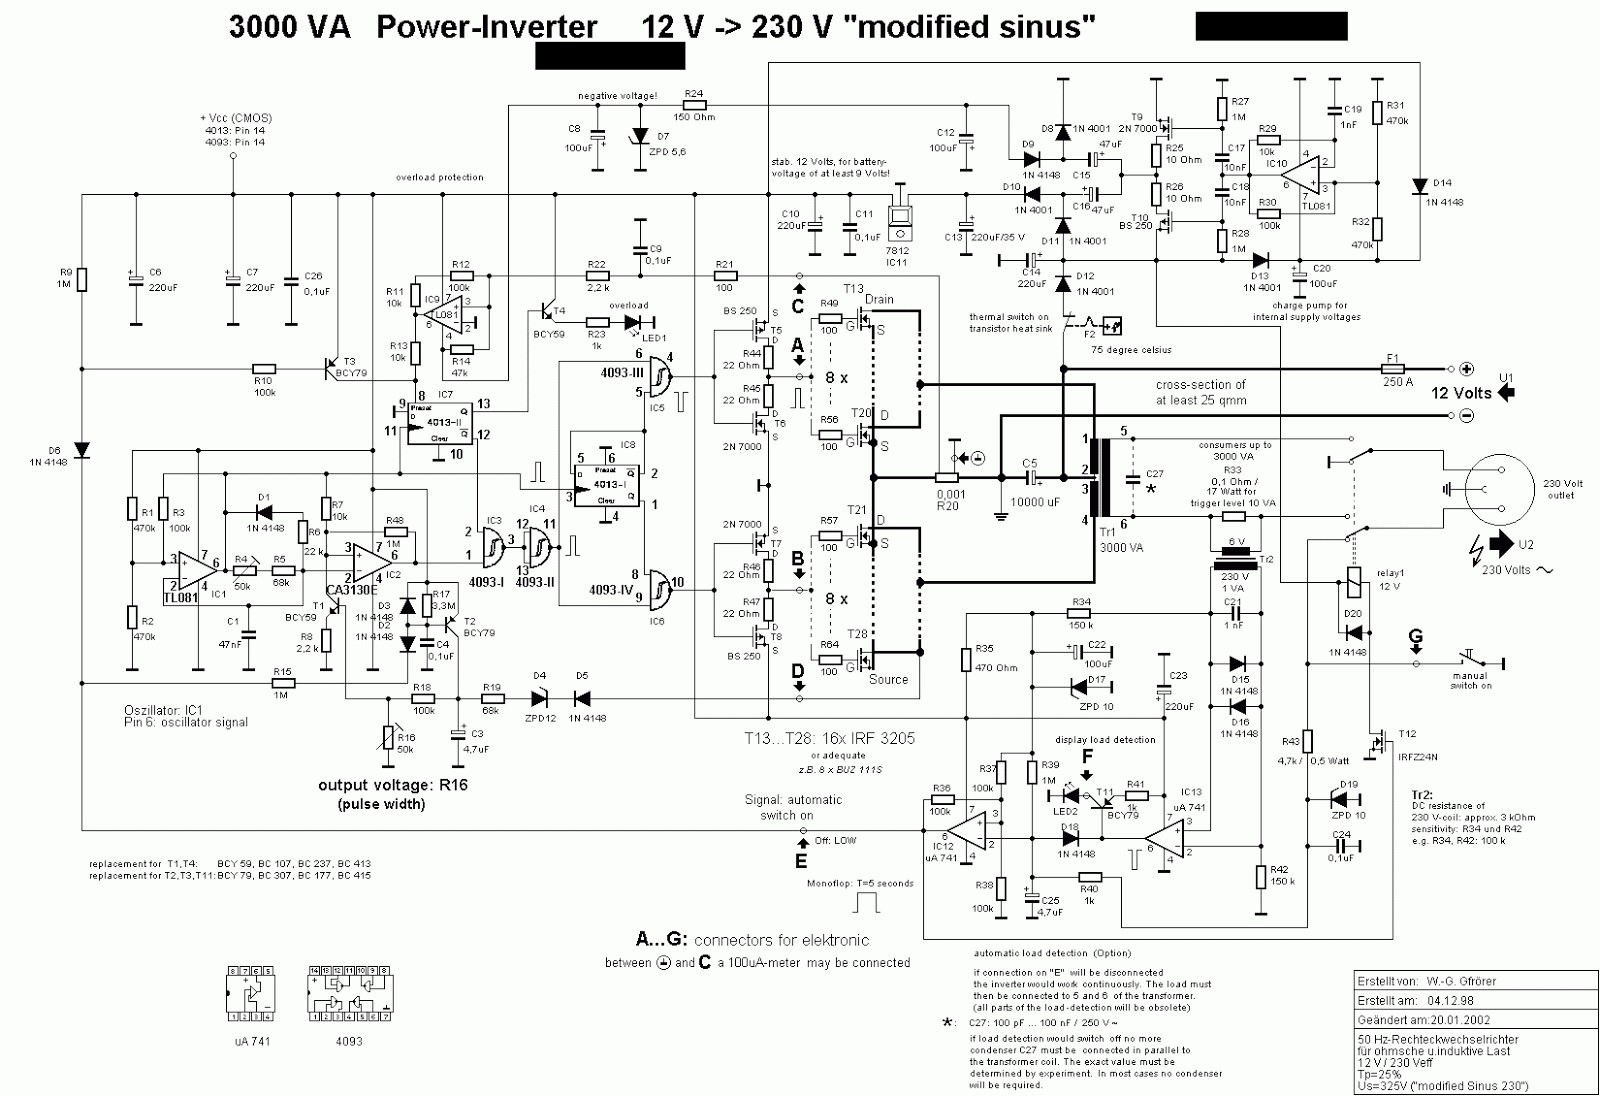 Circuit Diagram of 3000 watt power inverter 12V DC to 230V AC